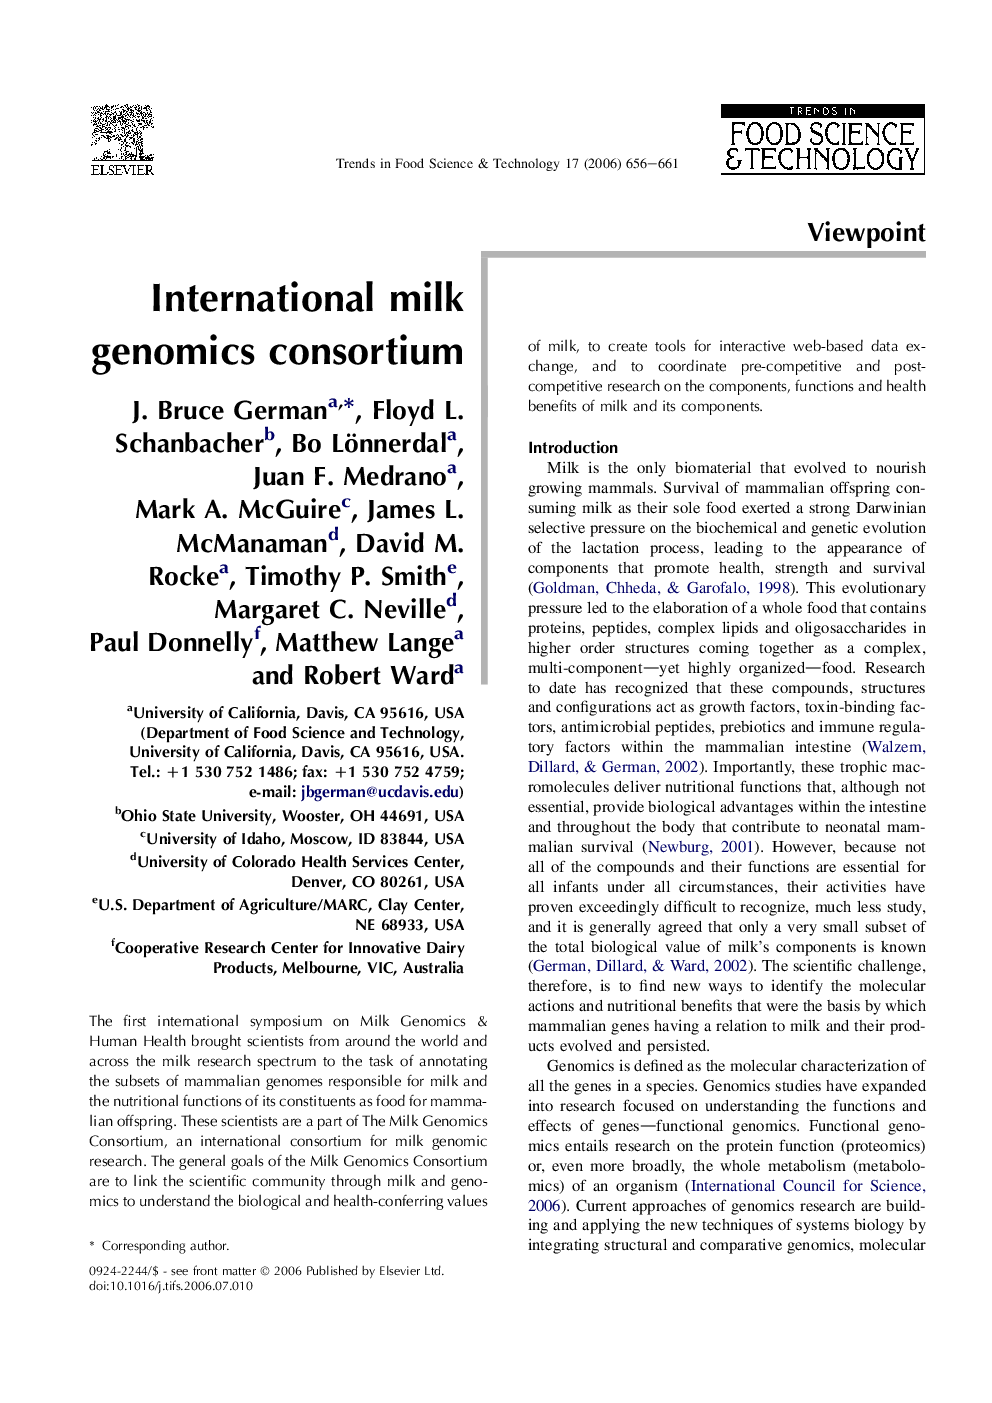 International milk genomics consortium